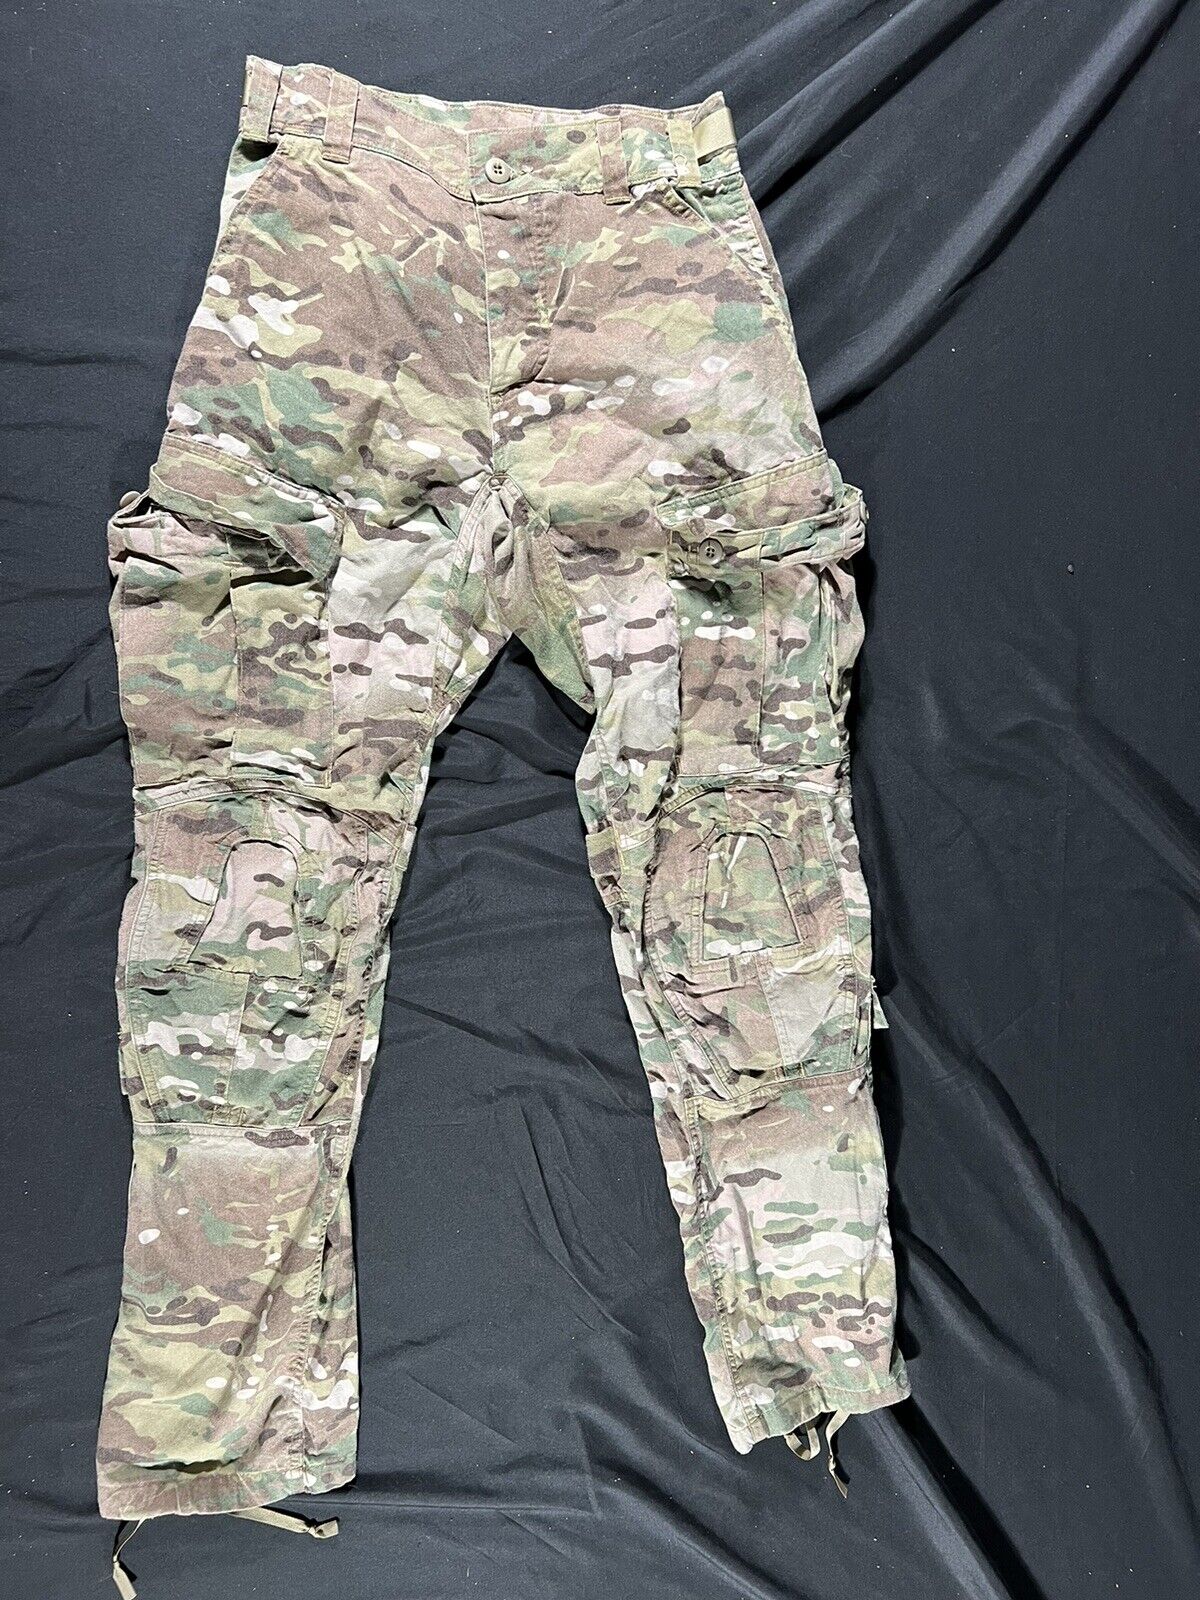 US ARMY TEAM SOLDIER OCP MULTICAM COMBAT PANTS W/ KNEEPAD SLOTS SMALL LONG